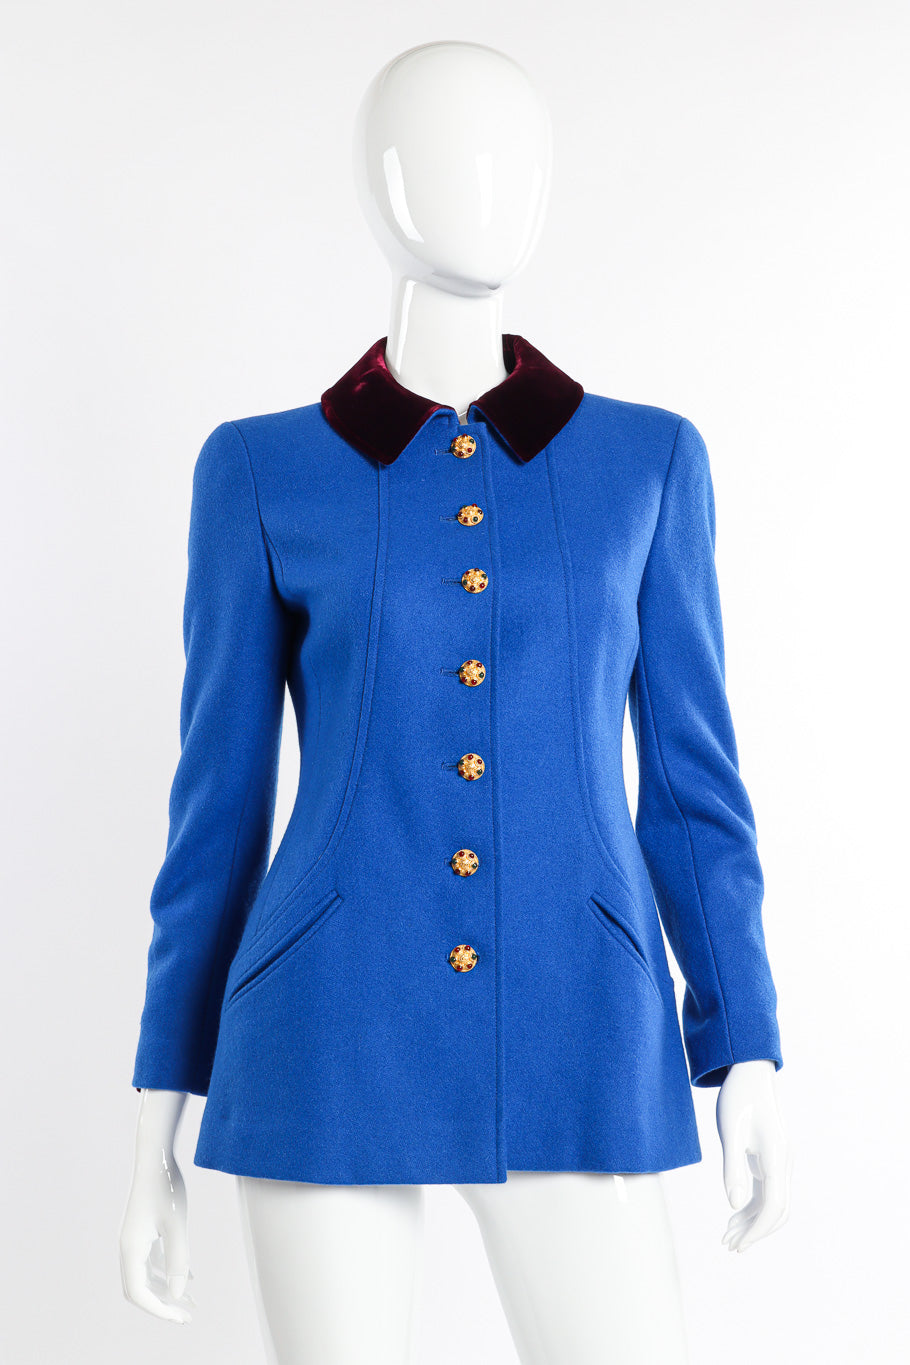 Velvet Collar Wool Jacket by Chanel on mannequin @recessla